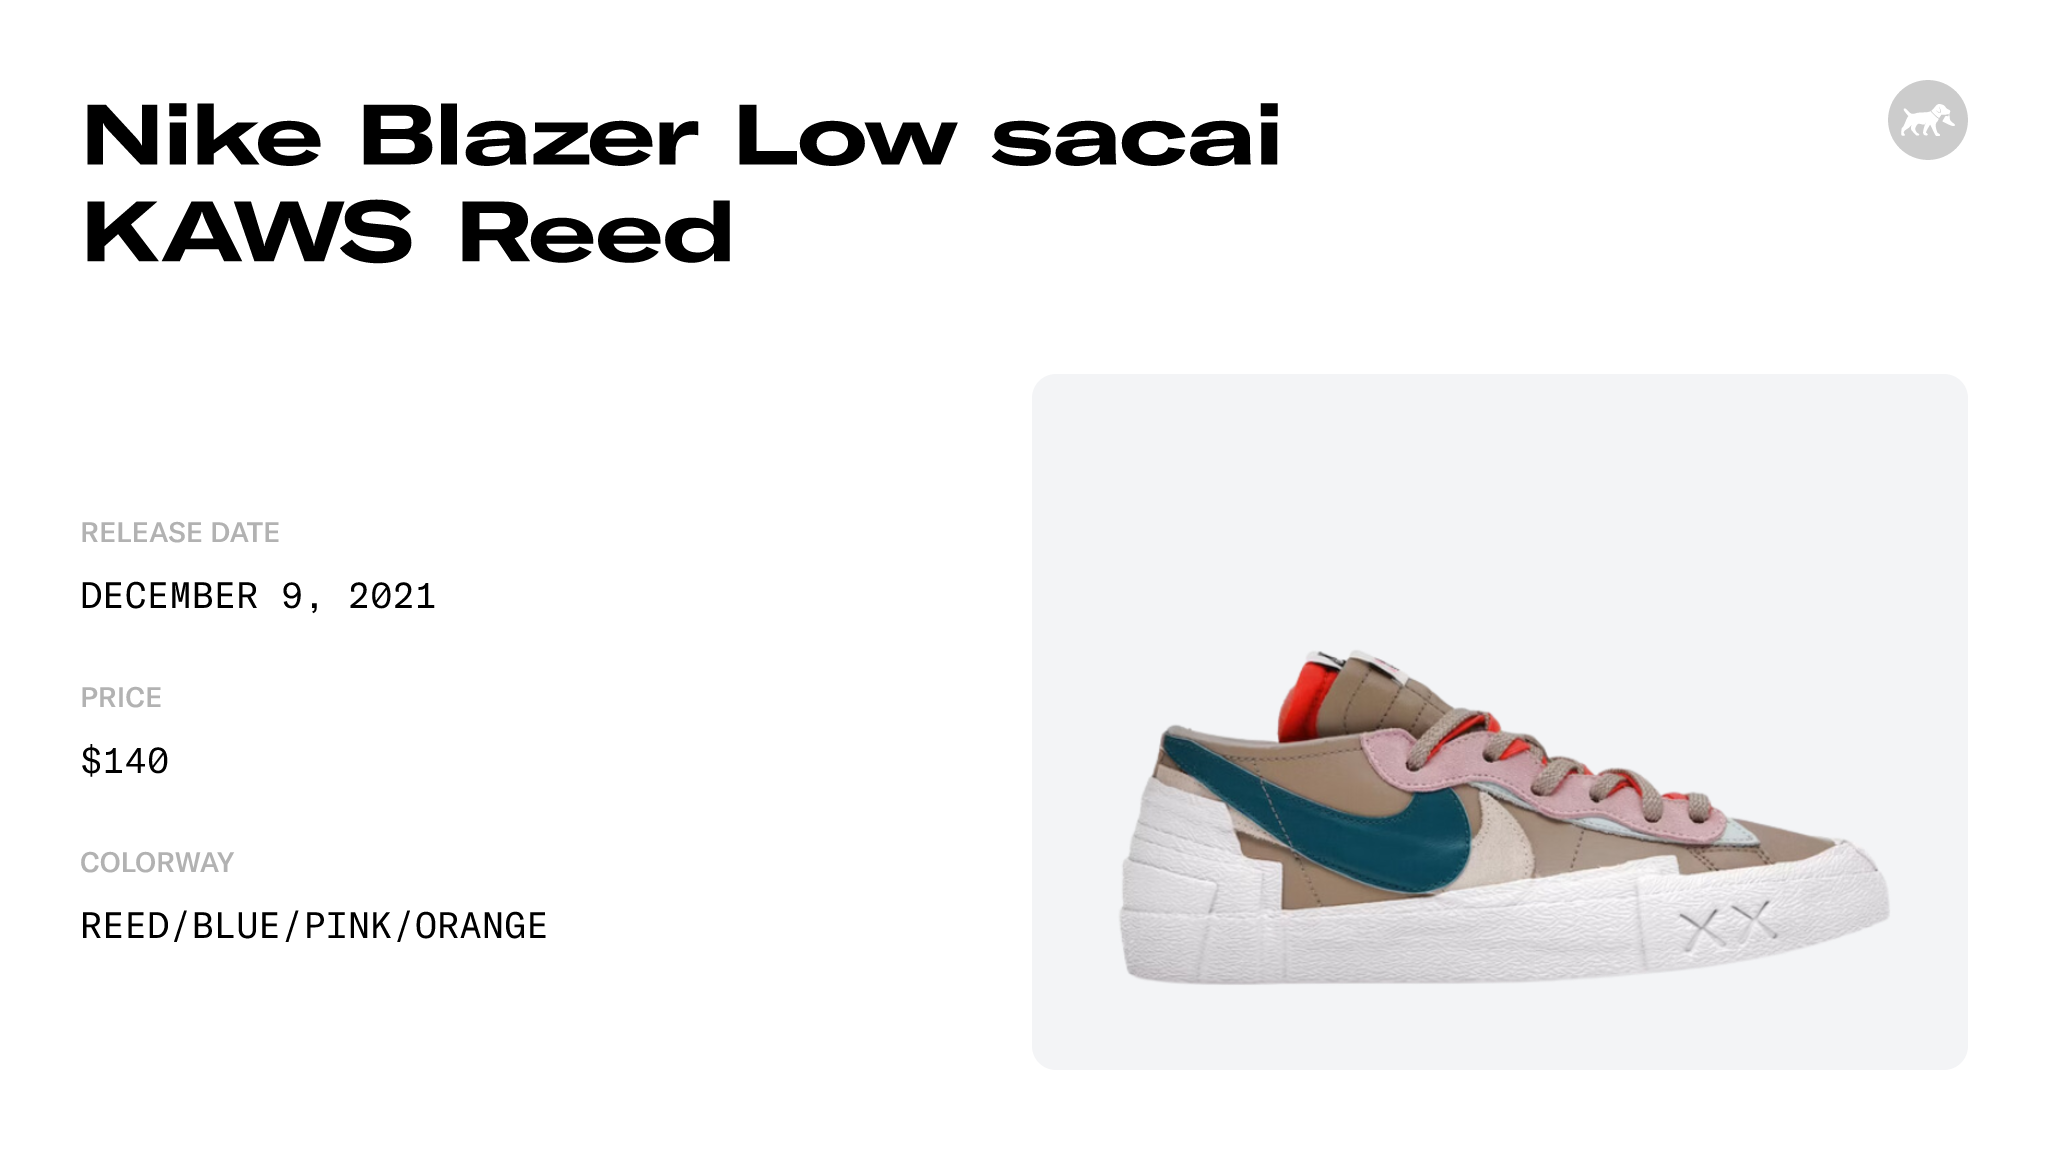 Nike Blazer Low sacai KAWS Reed Raffles and Release Date   Sole